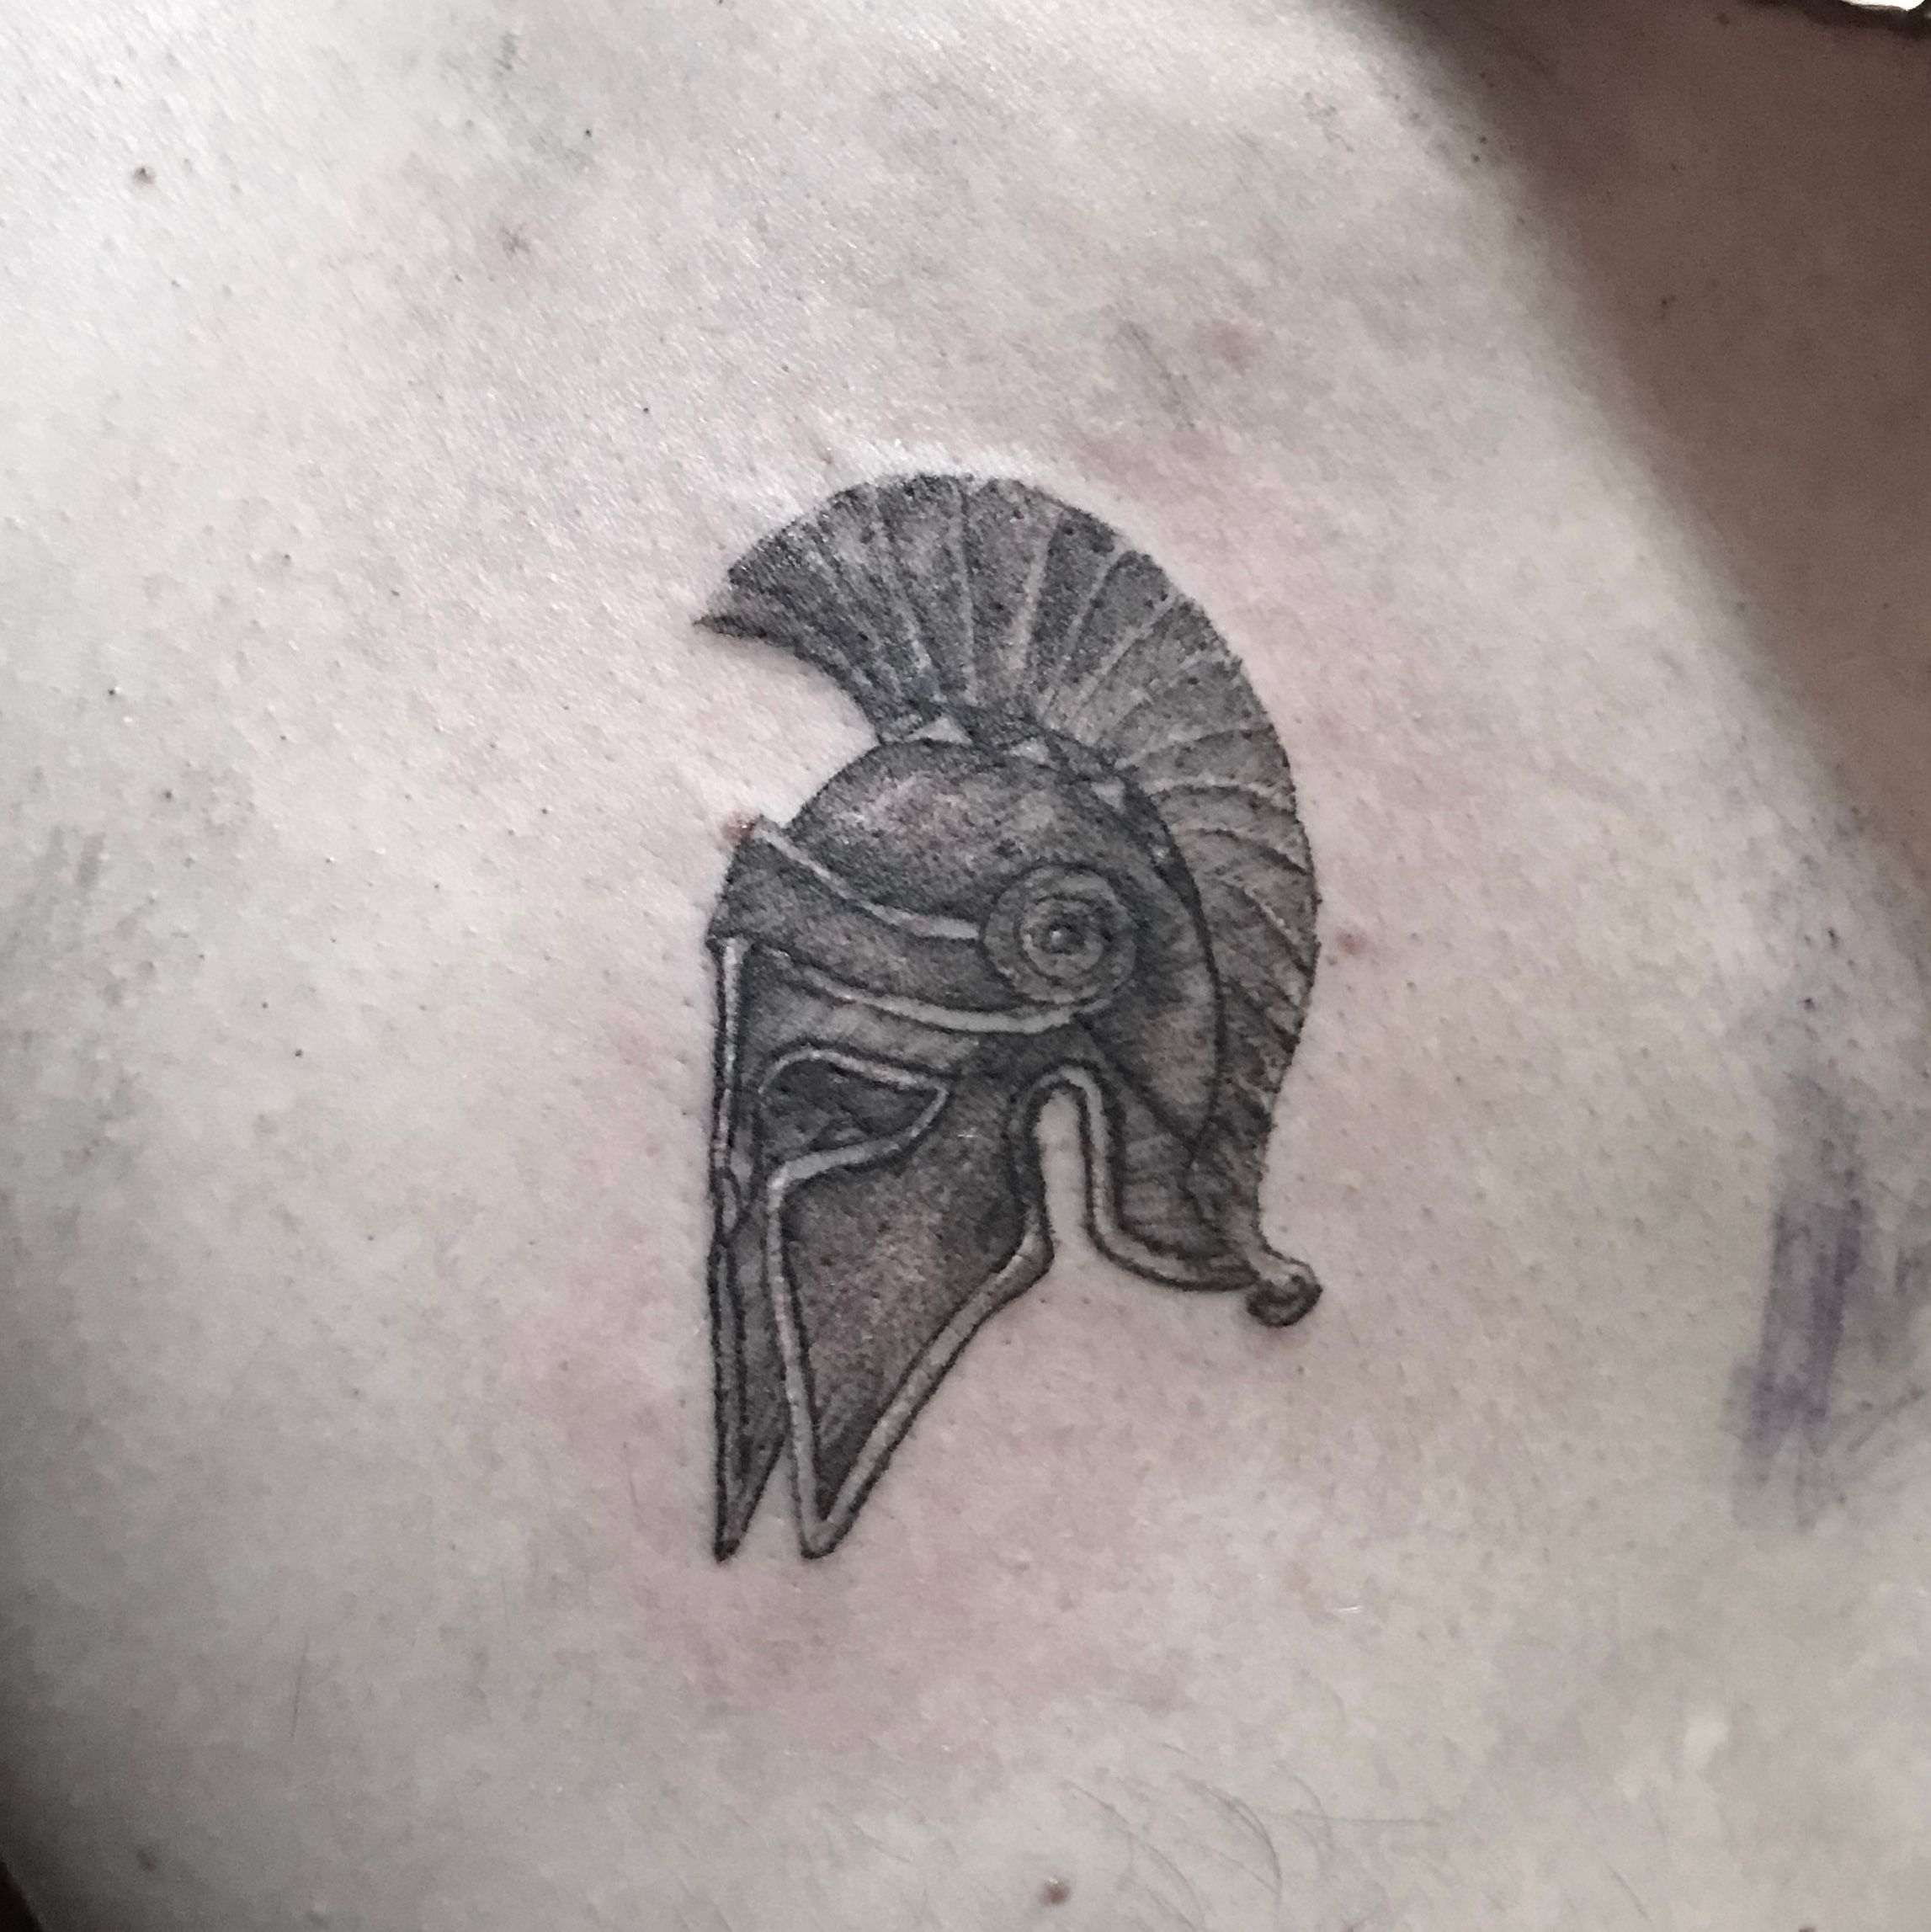 Spartan Helmet Tattoo Vector Images over 1400